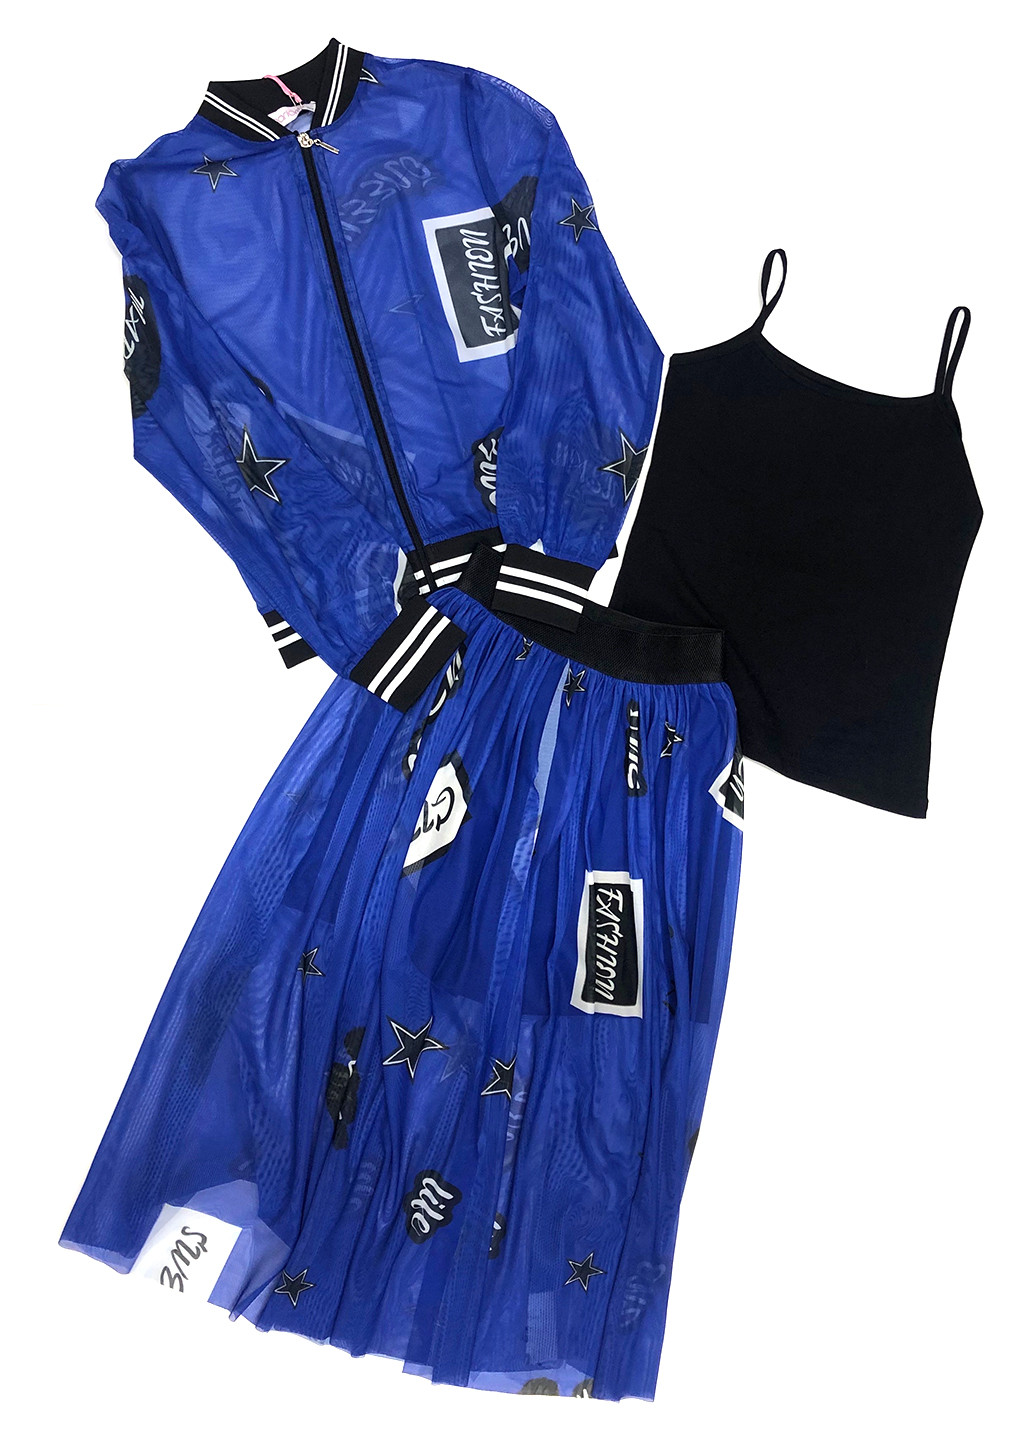 Синий демисезонный костюм (бомбер, майка, юбка) юбочный, тройка Marions